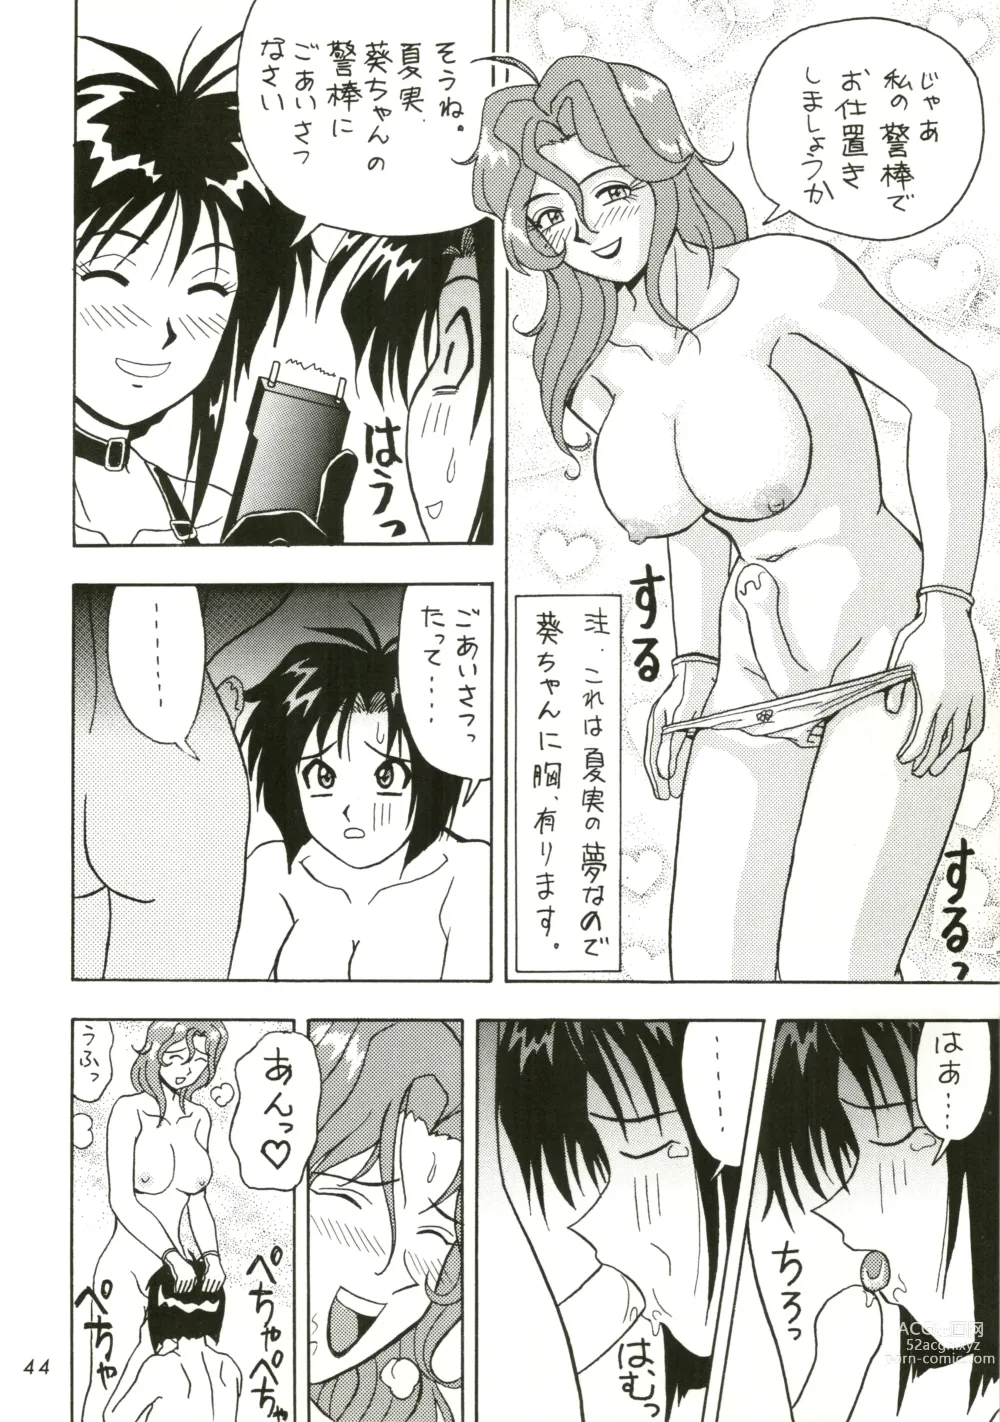 Page 44 of doujinshi FIRE!! CRACKER EX